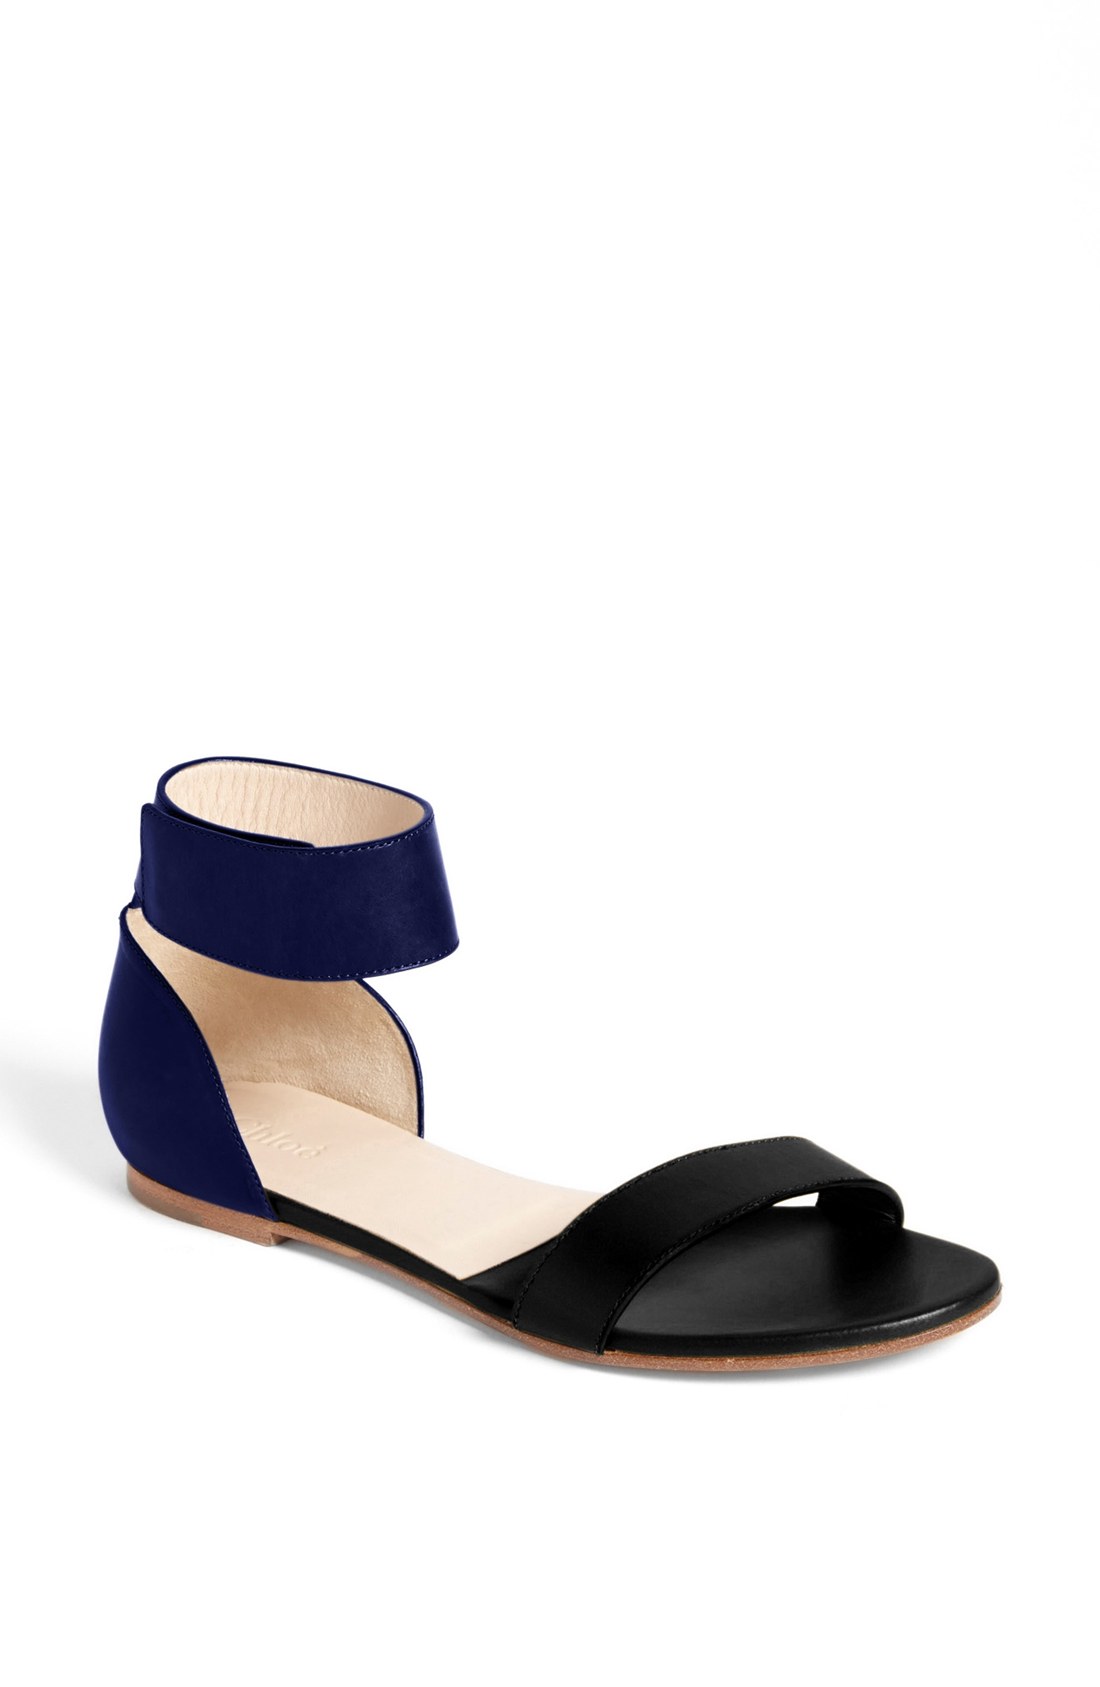 Chloé Gala Ankle Strap Flat Sandal in Blue (Navy/ Black) | Lyst